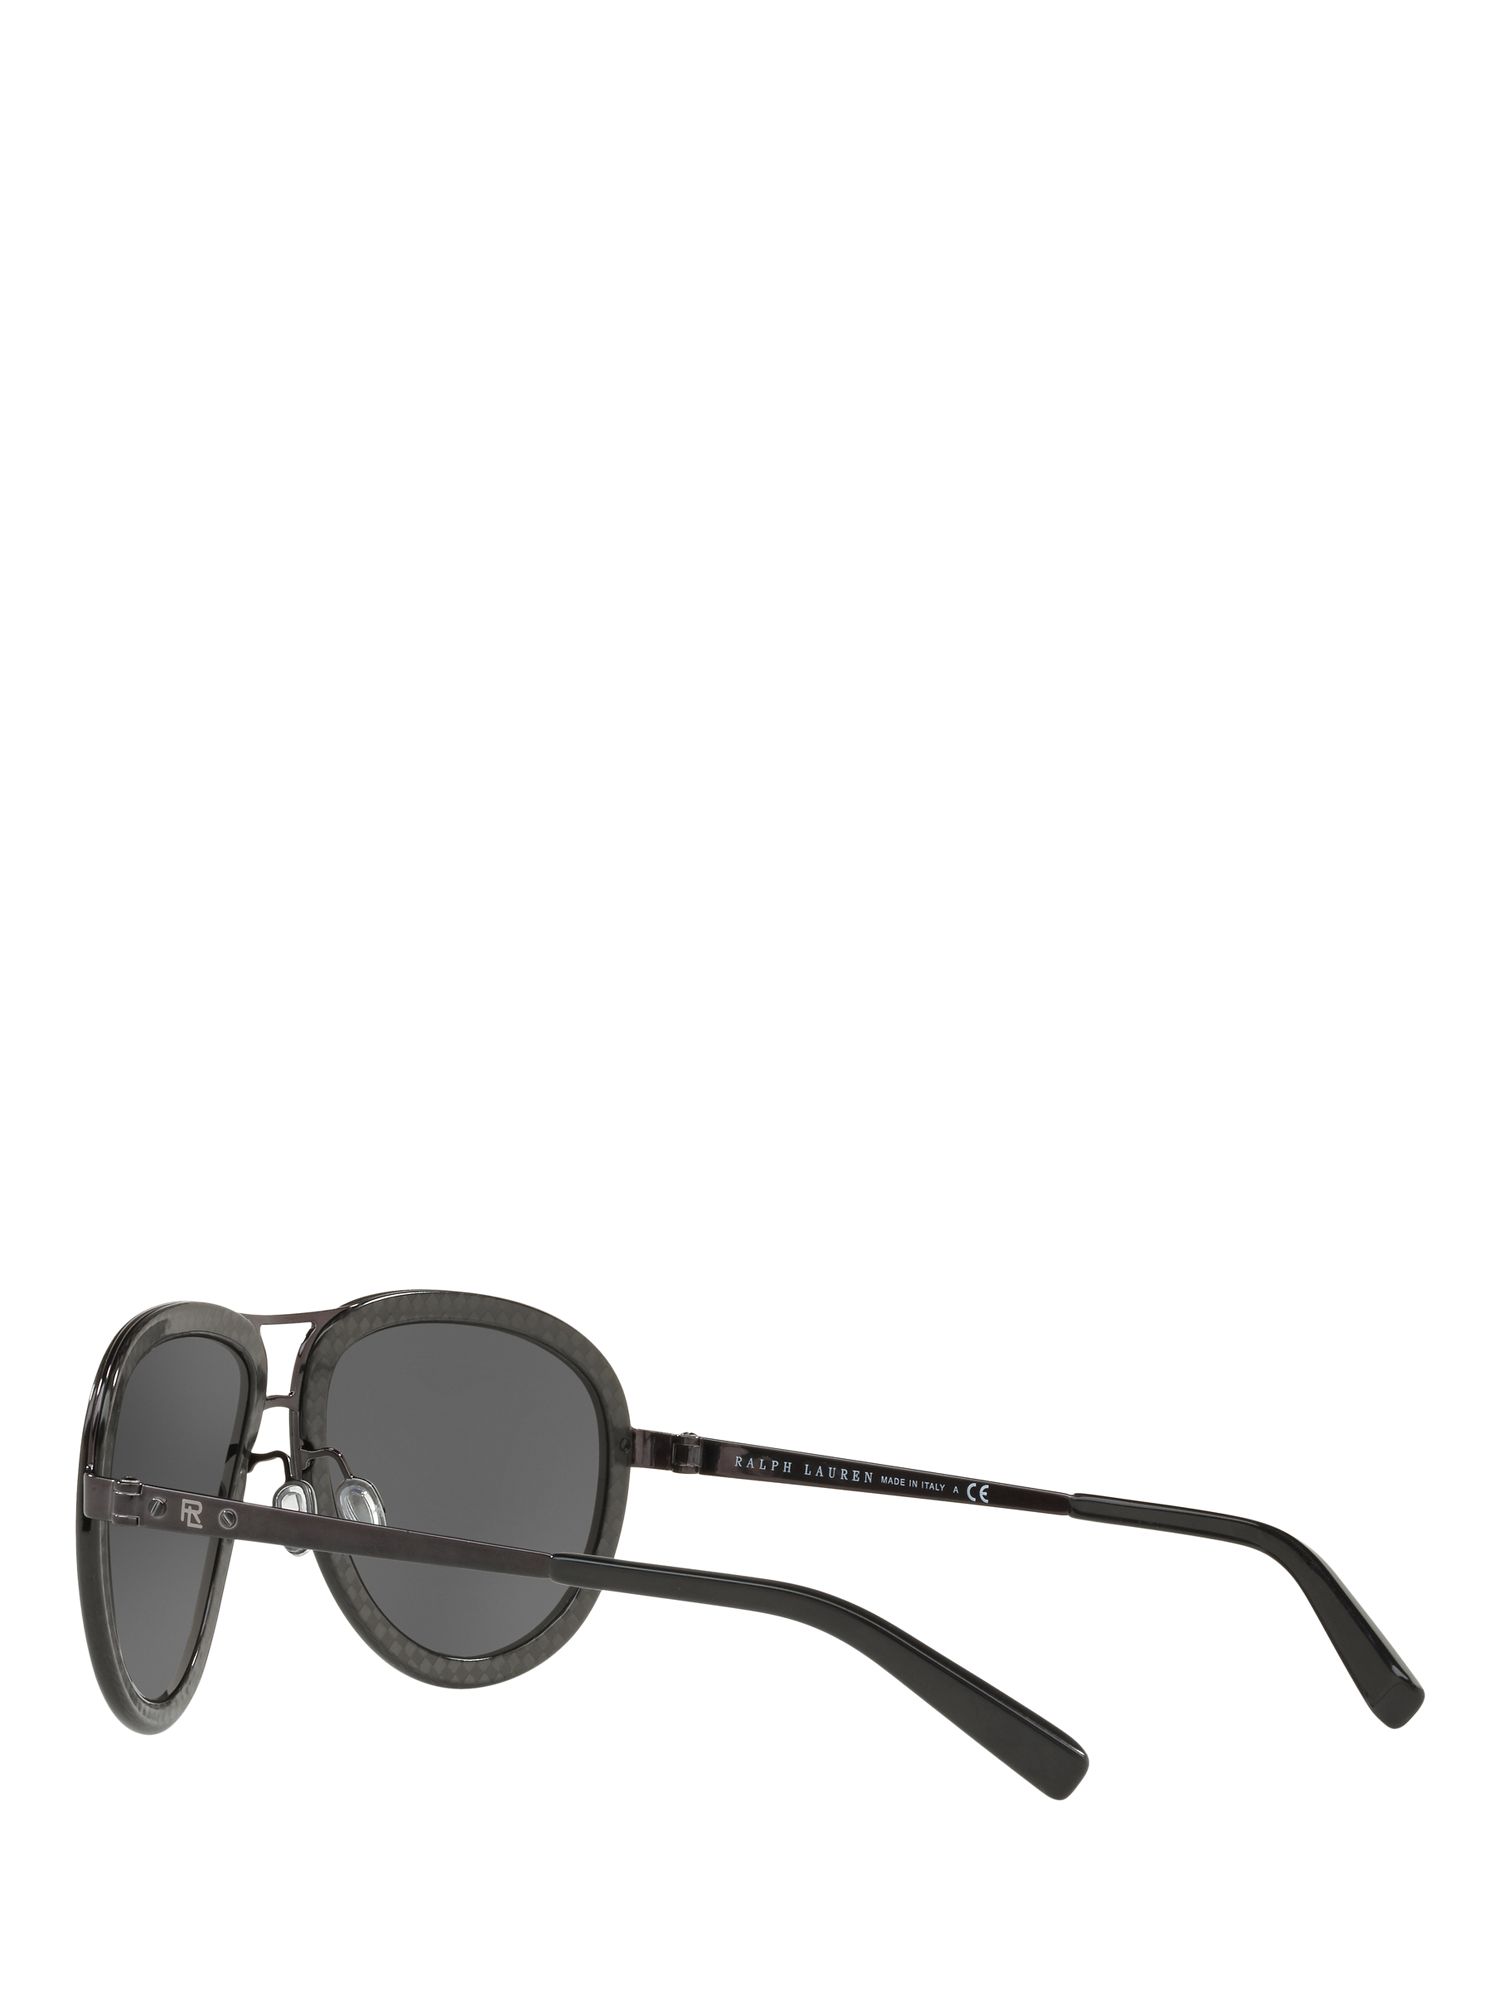 Buy Ralph Lauren RL7053 Unisex Aviator Sunglasses, Shiny Carbon/Grey Online at johnlewis.com